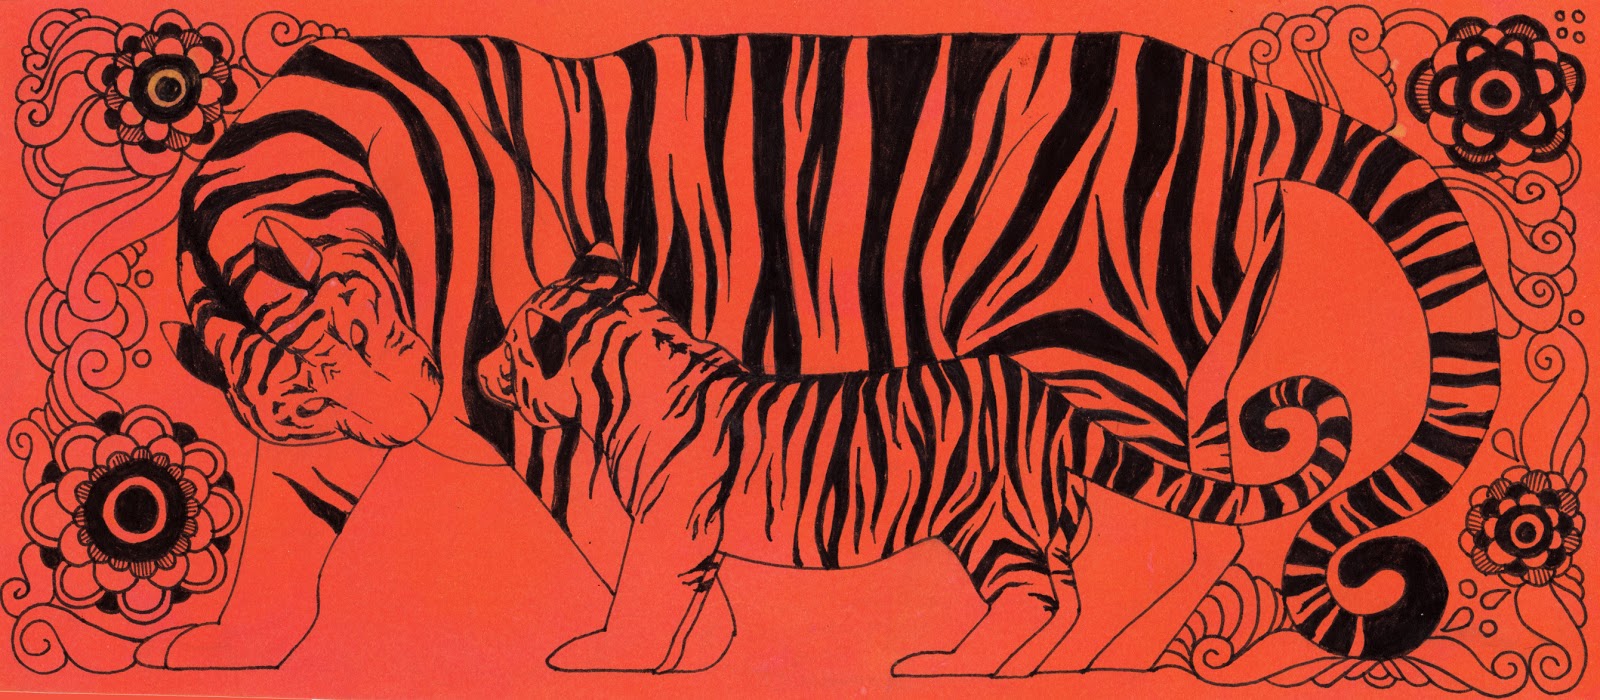 Erek Jones Illustration: Tiger Camo